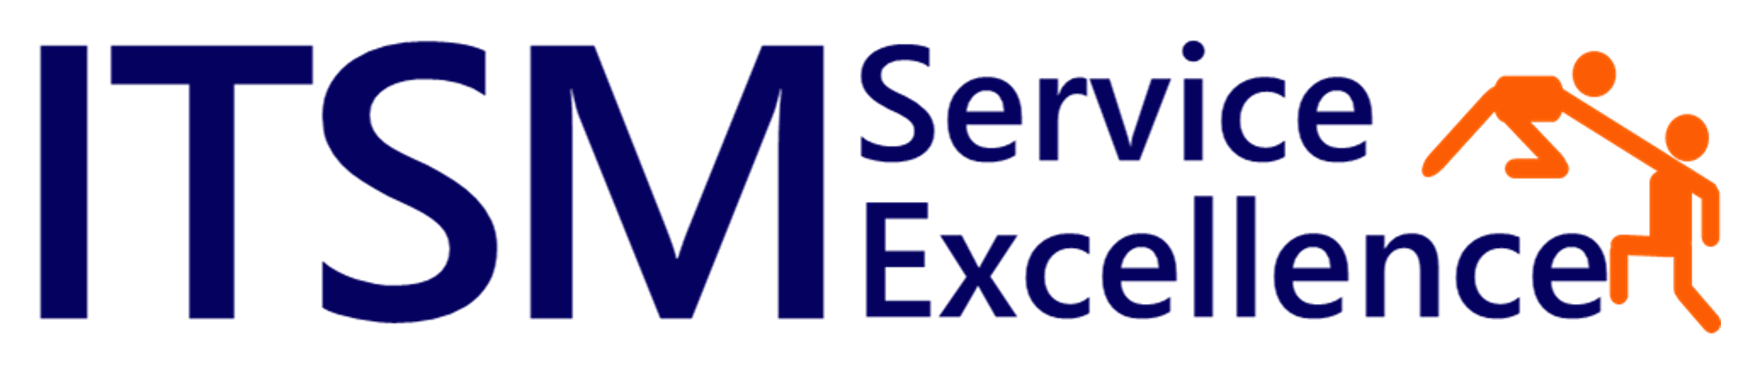 ITSM Service Excellence Ltd®